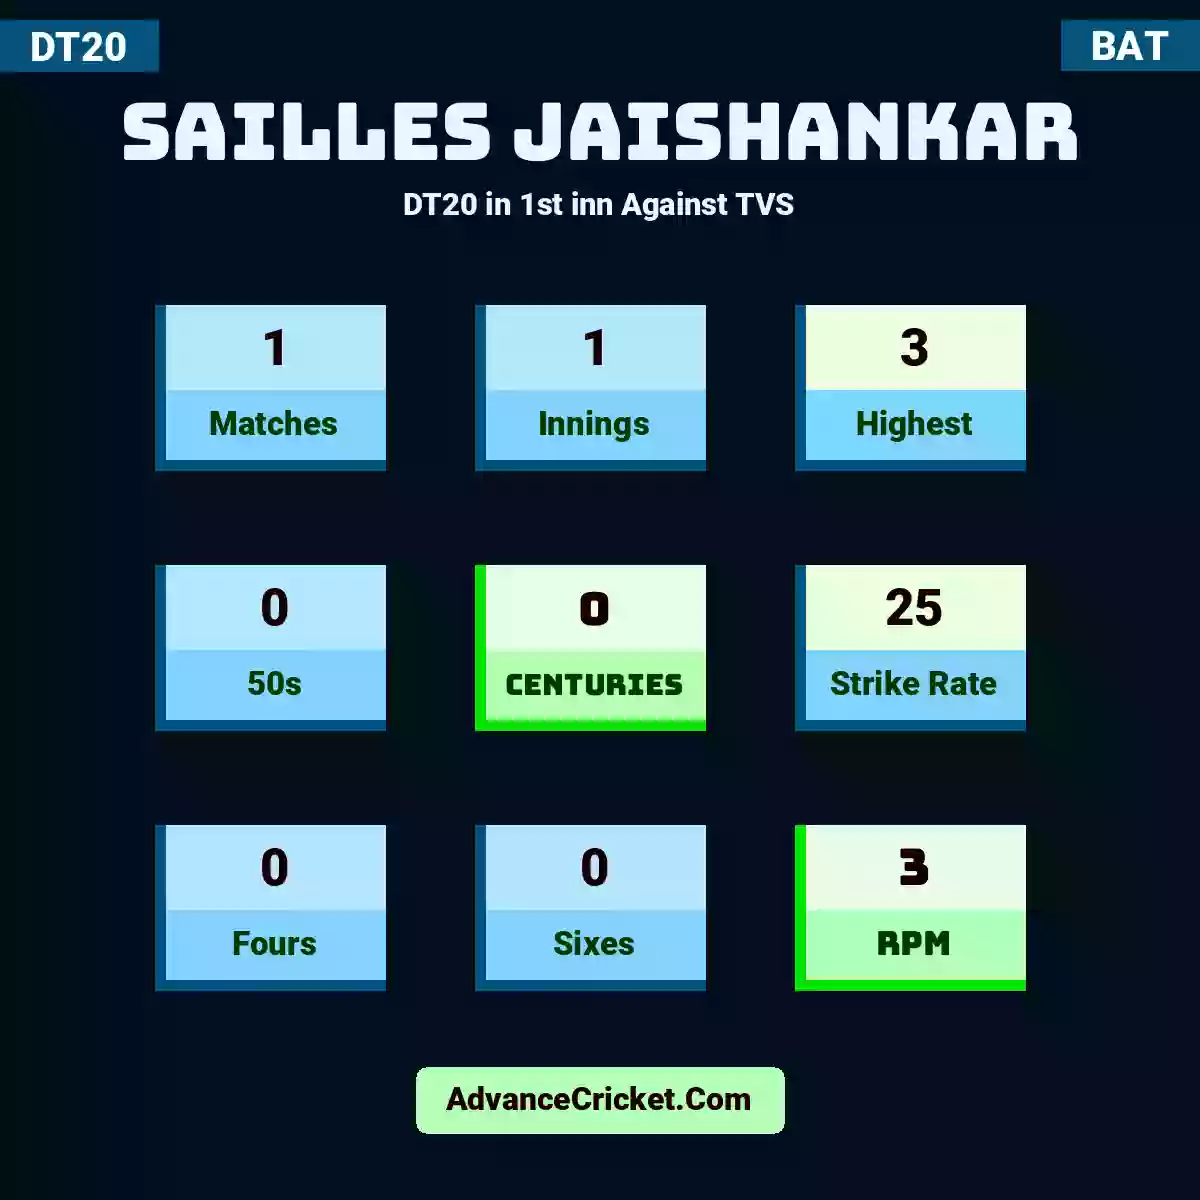 Sailles Jaishankar DT20  in 1st inn Against TVS, Sailles Jaishankar played 1 matches, scored 3 runs as highest, 0 half-centuries, and 0 centuries, with a strike rate of 25. S.Jaishankar hit 0 fours and 0 sixes, with an RPM of 3.